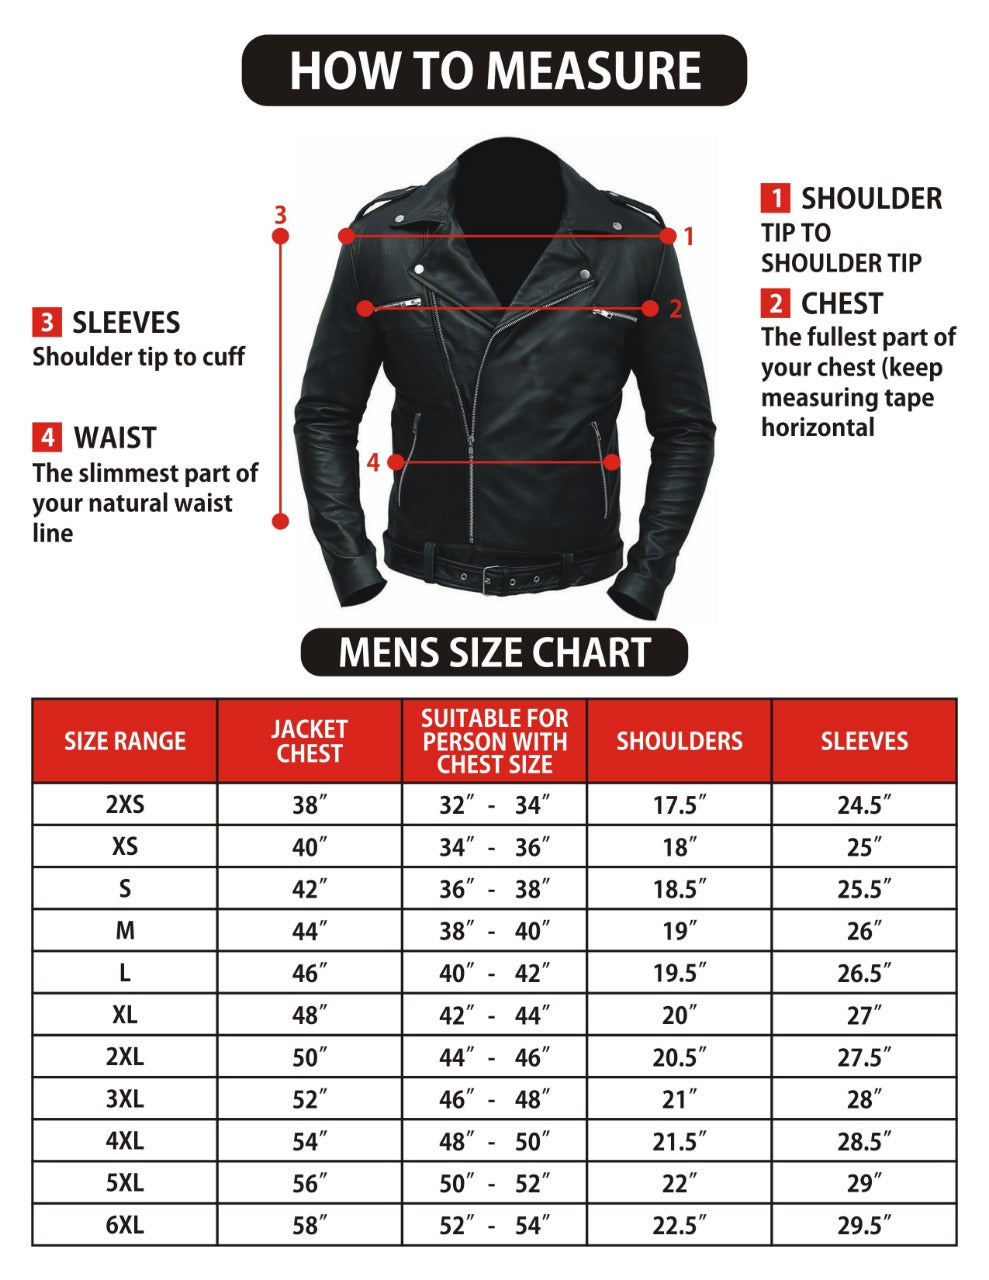 Spine Spark Men's Black Brando Motorbike Leather Jacket